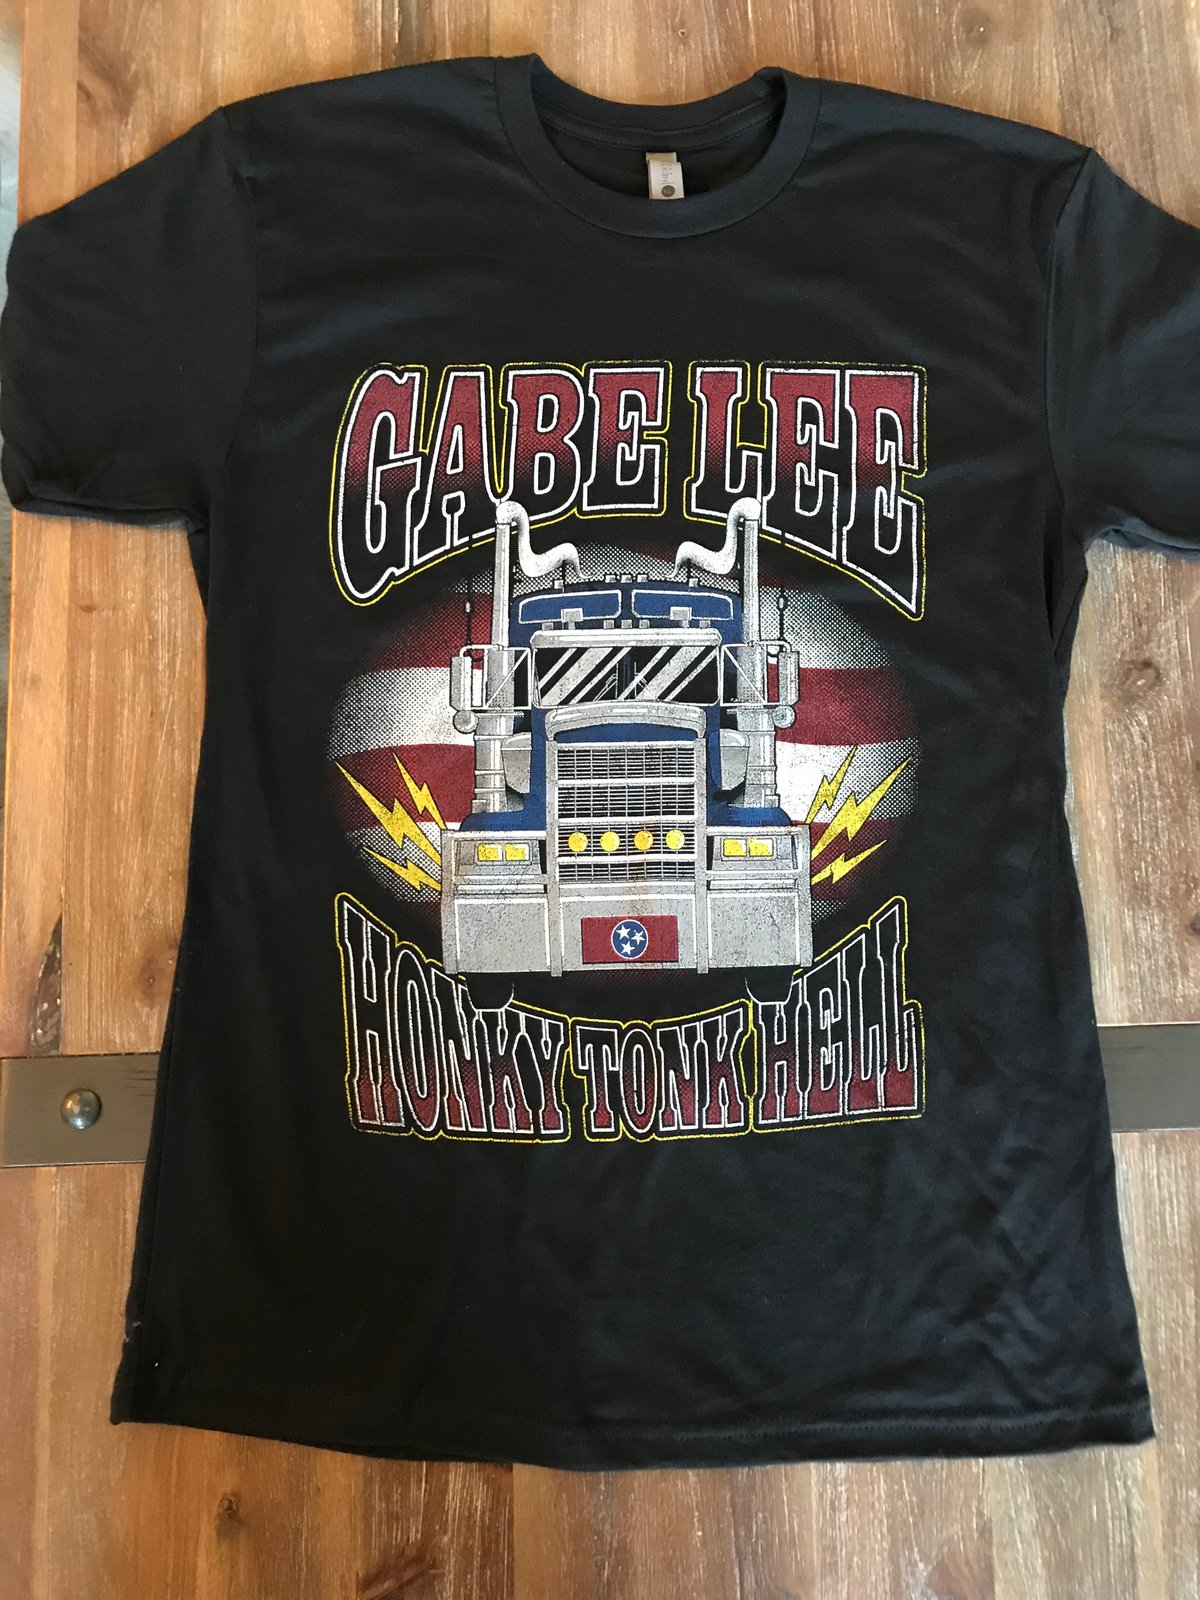 Gabe Lee - Keep On Truckin'  HTH Shirt 